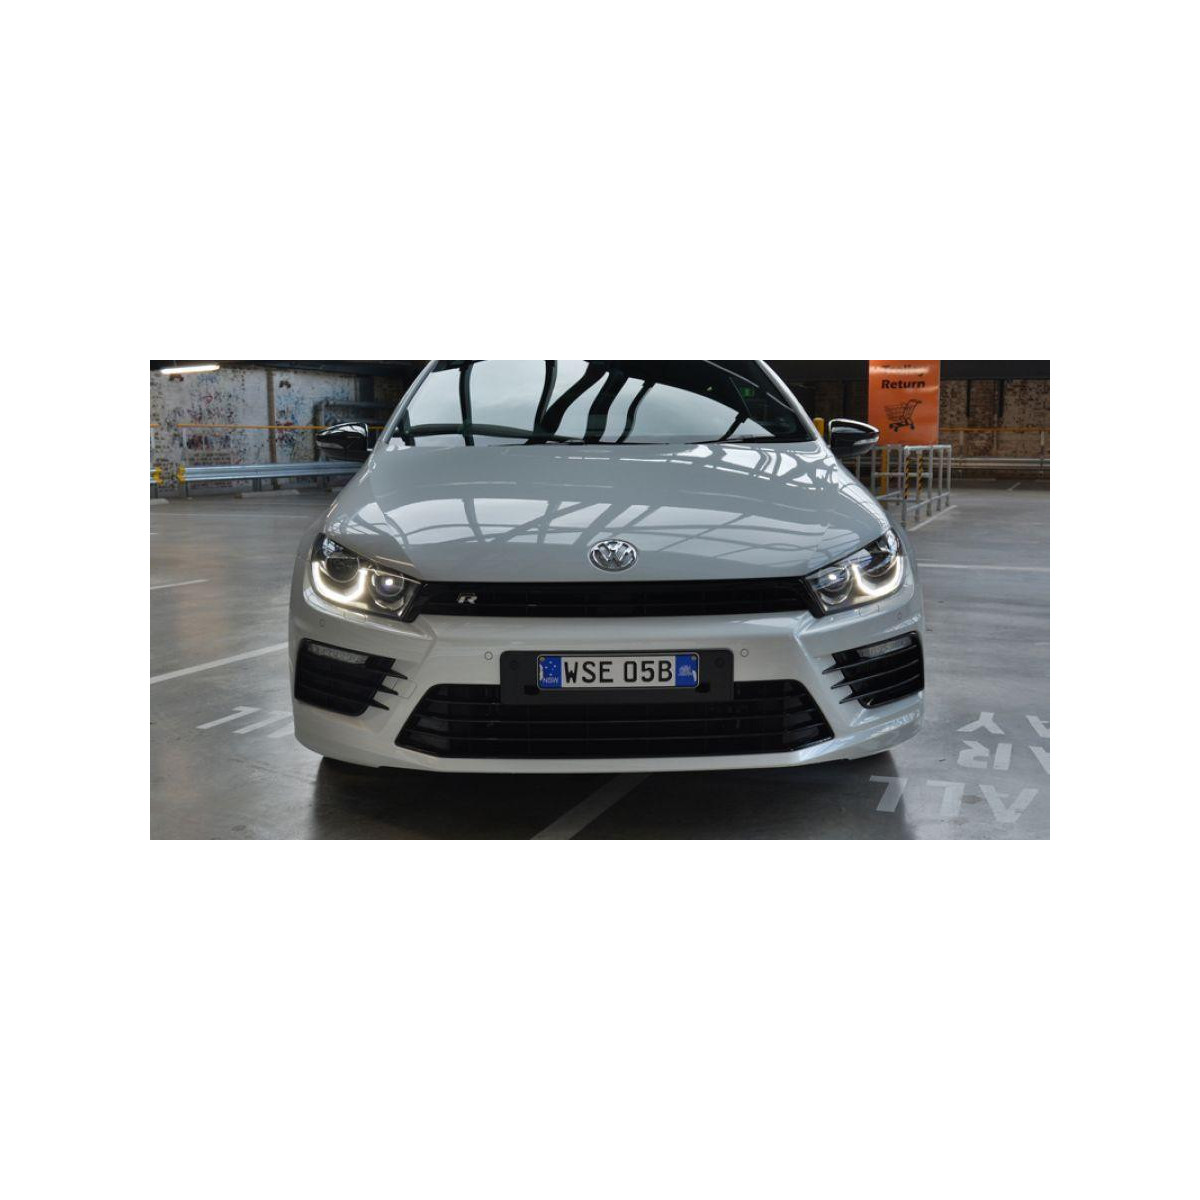 BODY KIT VW SCIROCCO 2015- R20 LOOK